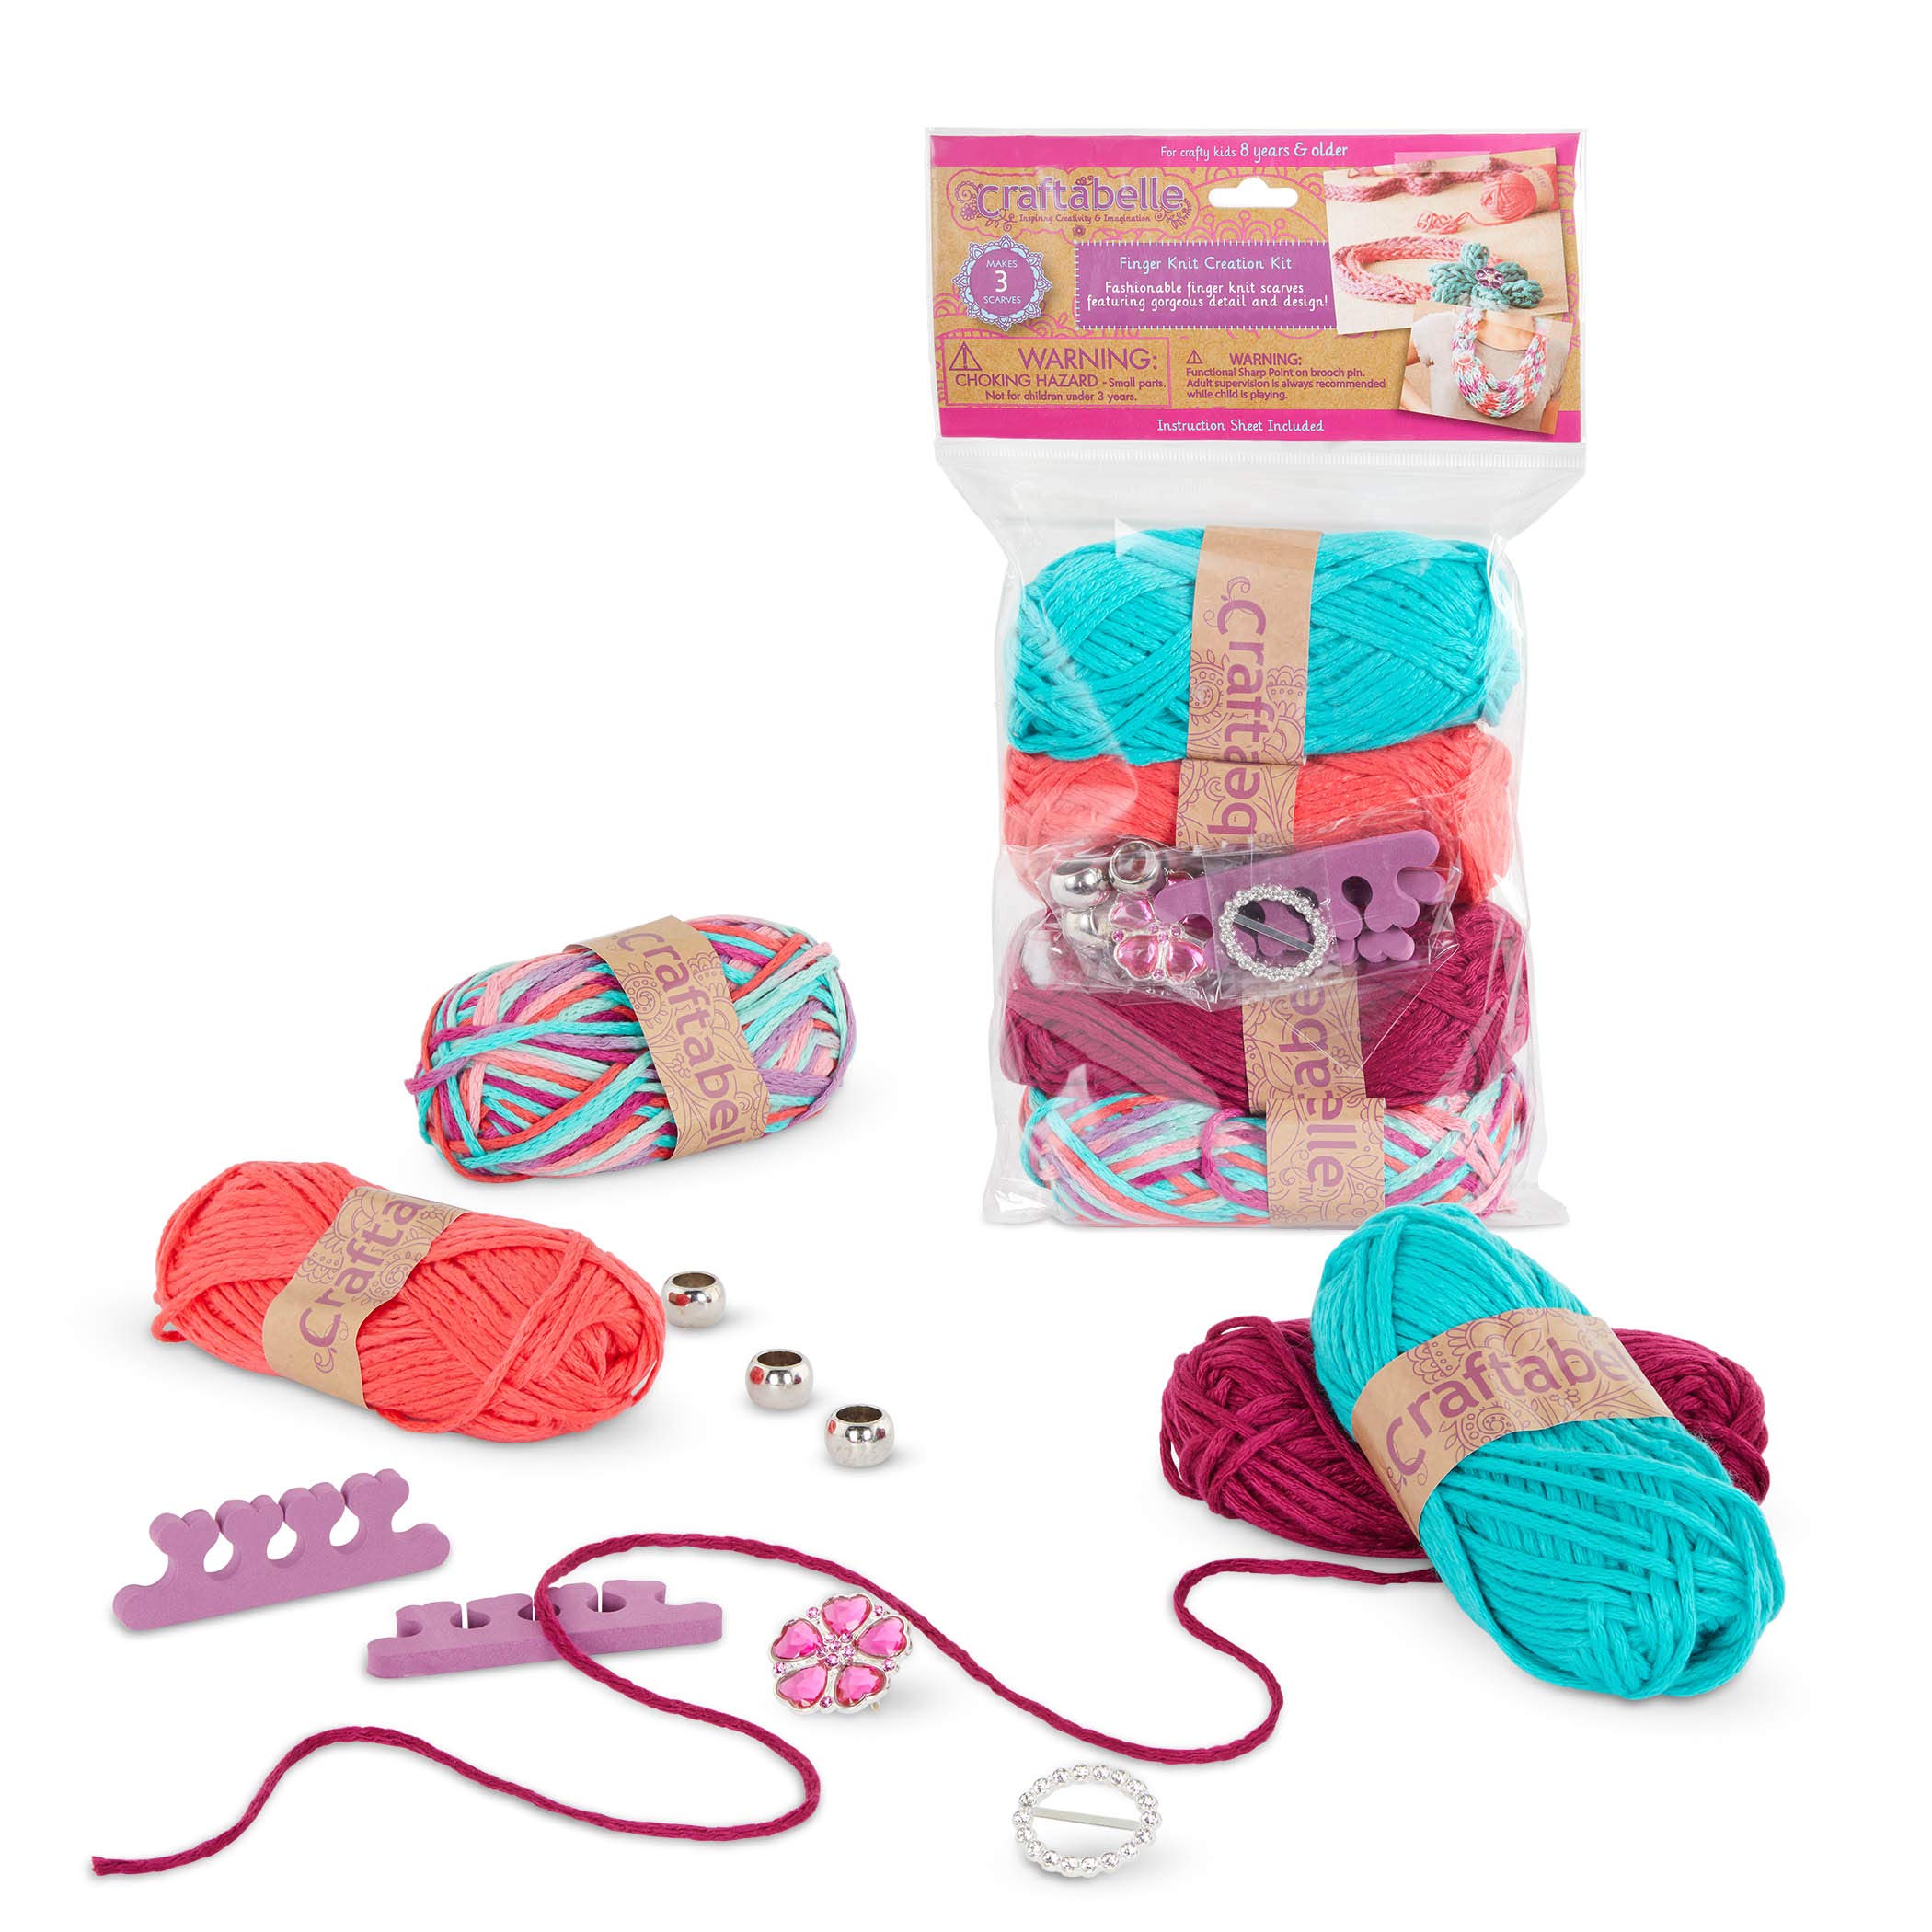 Craftabelle - Cozy Cuffs & Cowls Creation Kit - Beginner Knitting